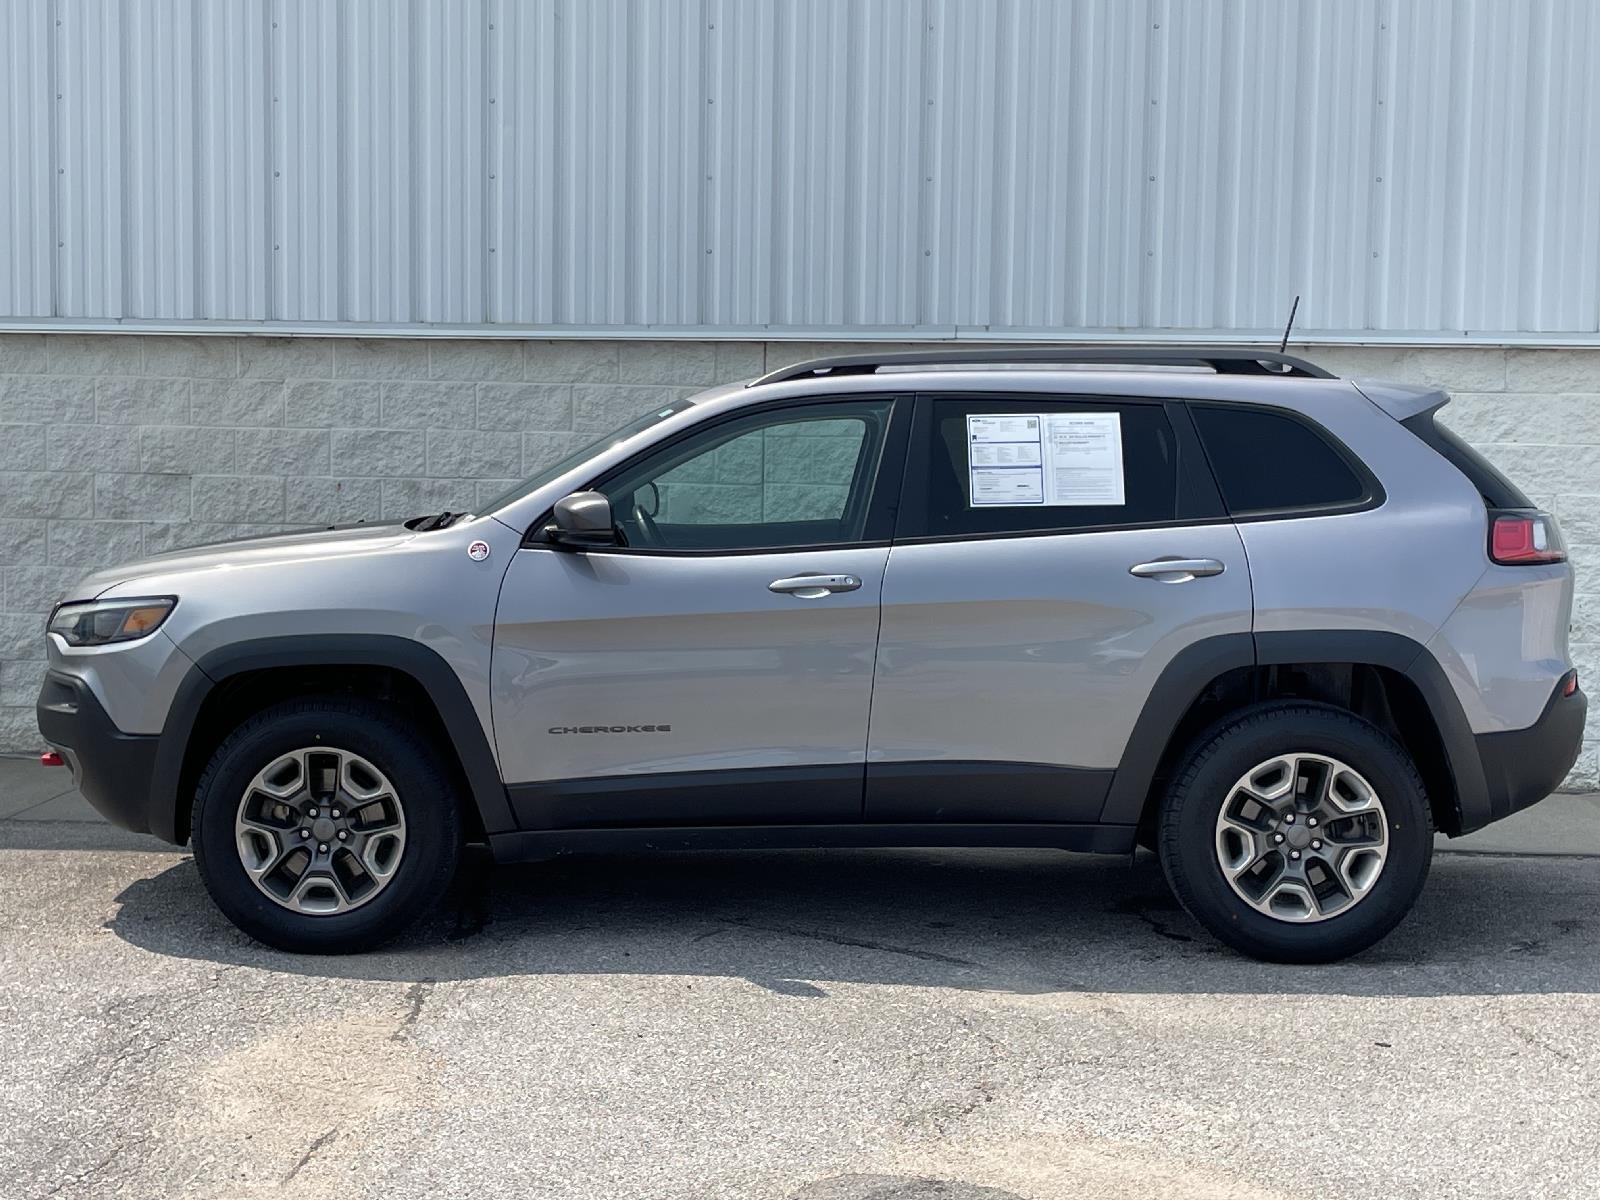 Used 2019 Jeep Cherokee Trailhawk SUV for sale in Lincoln NE